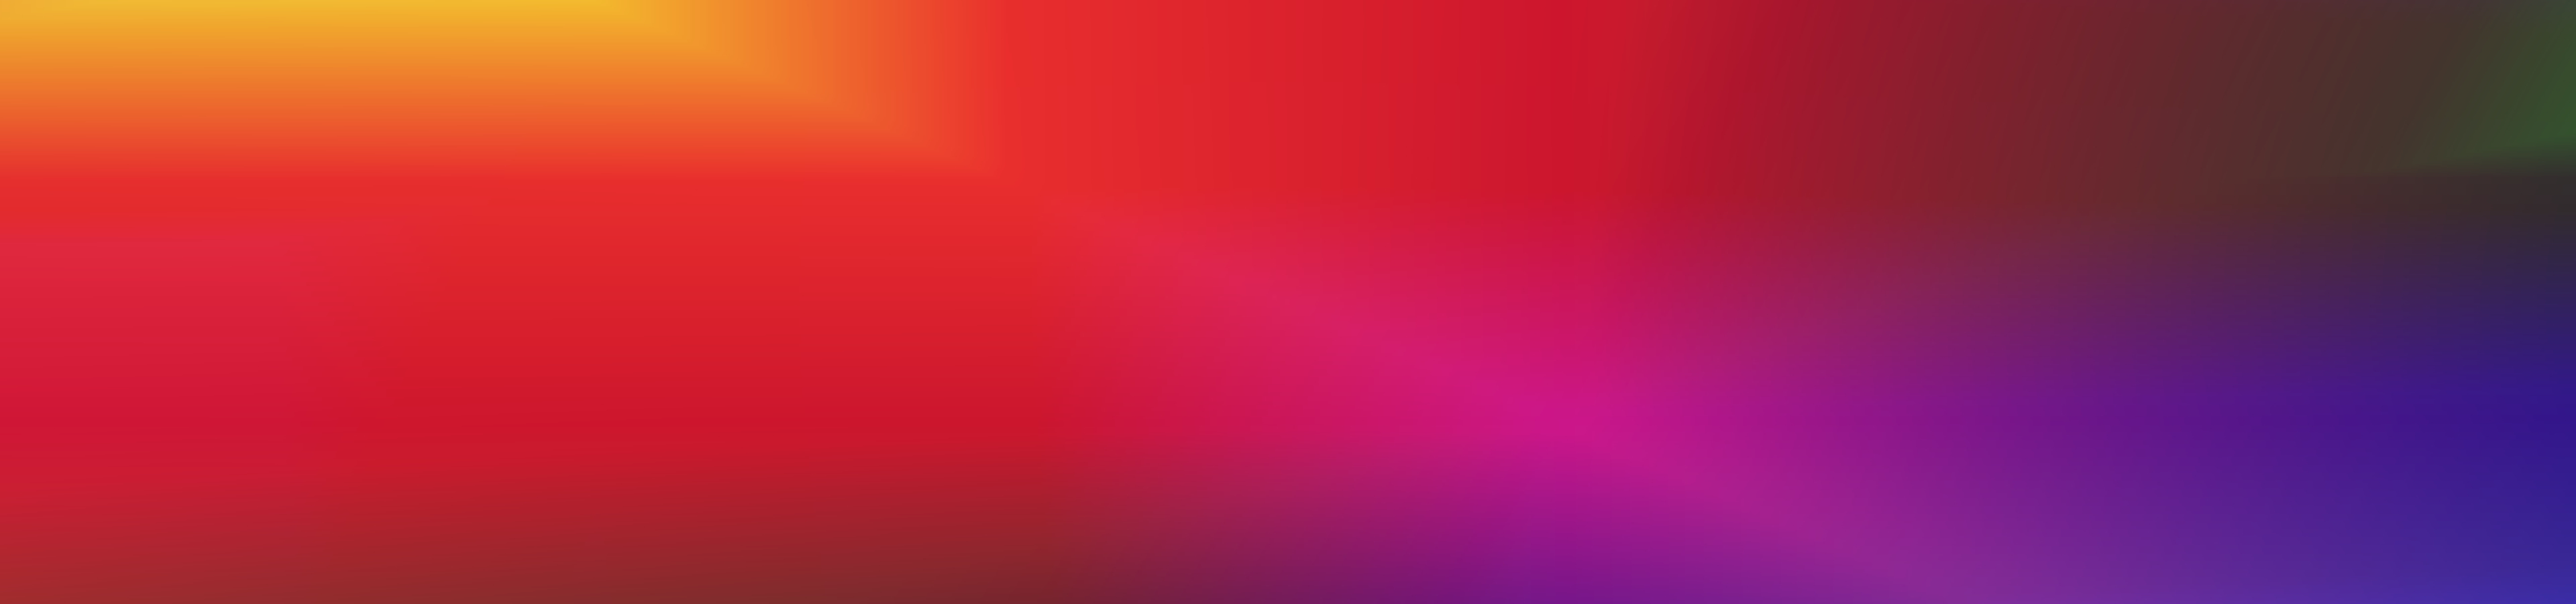 5120x1200 Light Beam Rainbow 5120x1200 Resolution Wallpaper, HD ...